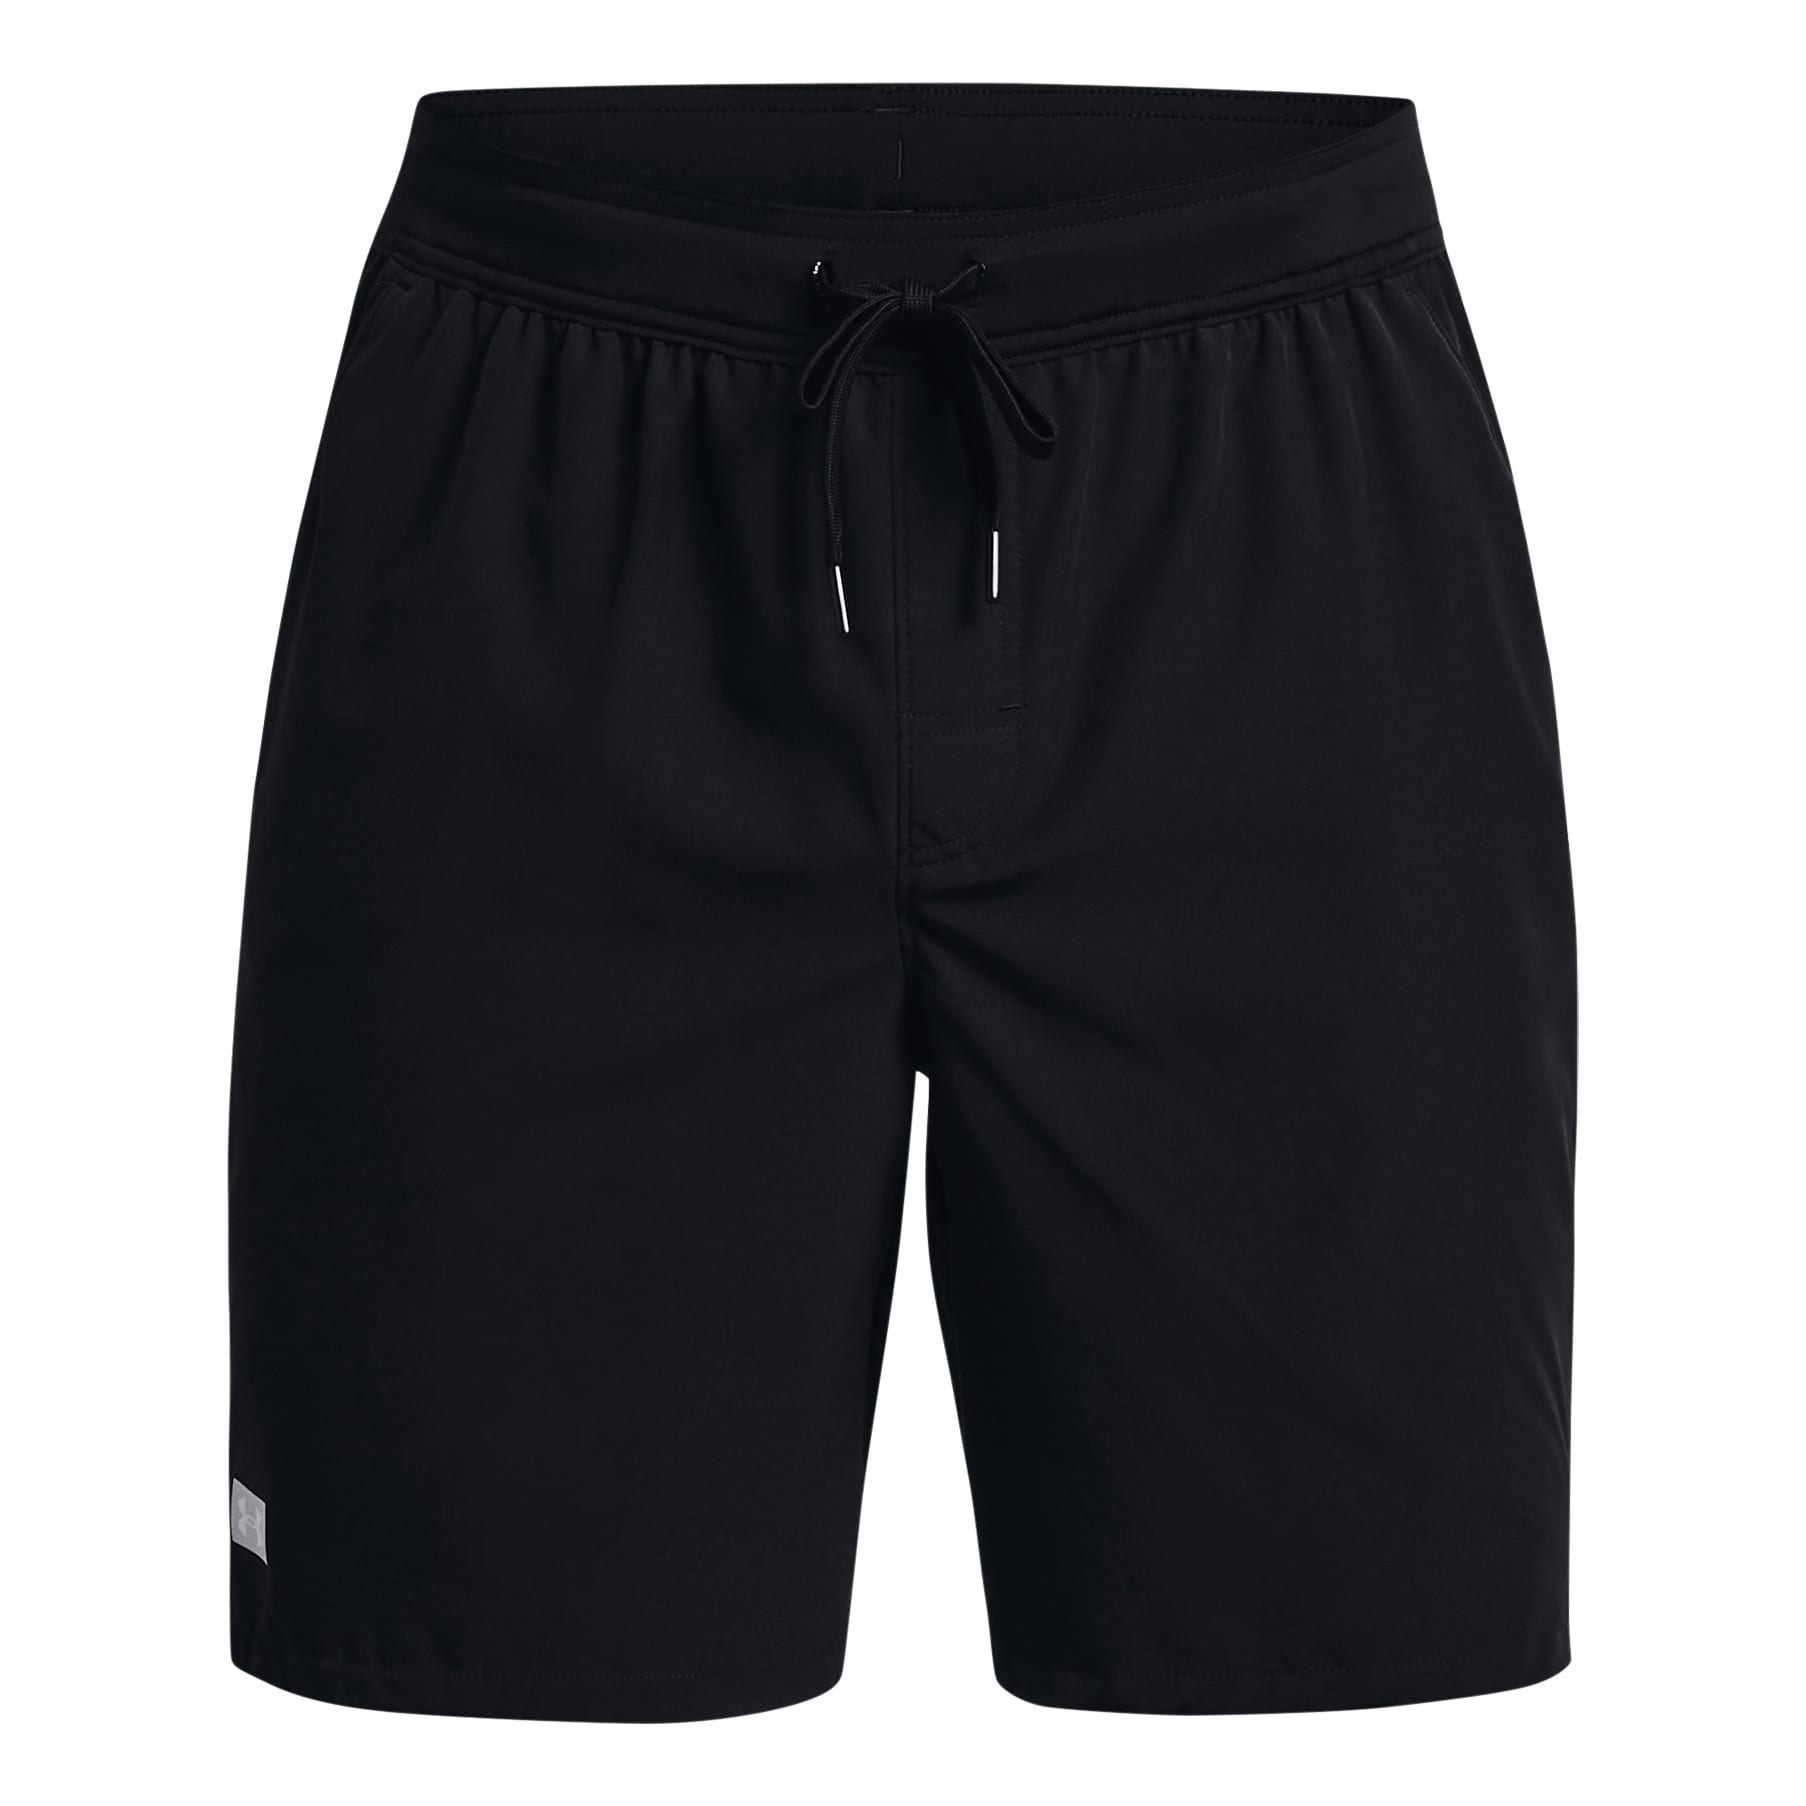 Under Armour® Men’s Shorebreak 2-in-1 Board Shorts - Black/Mod Grey